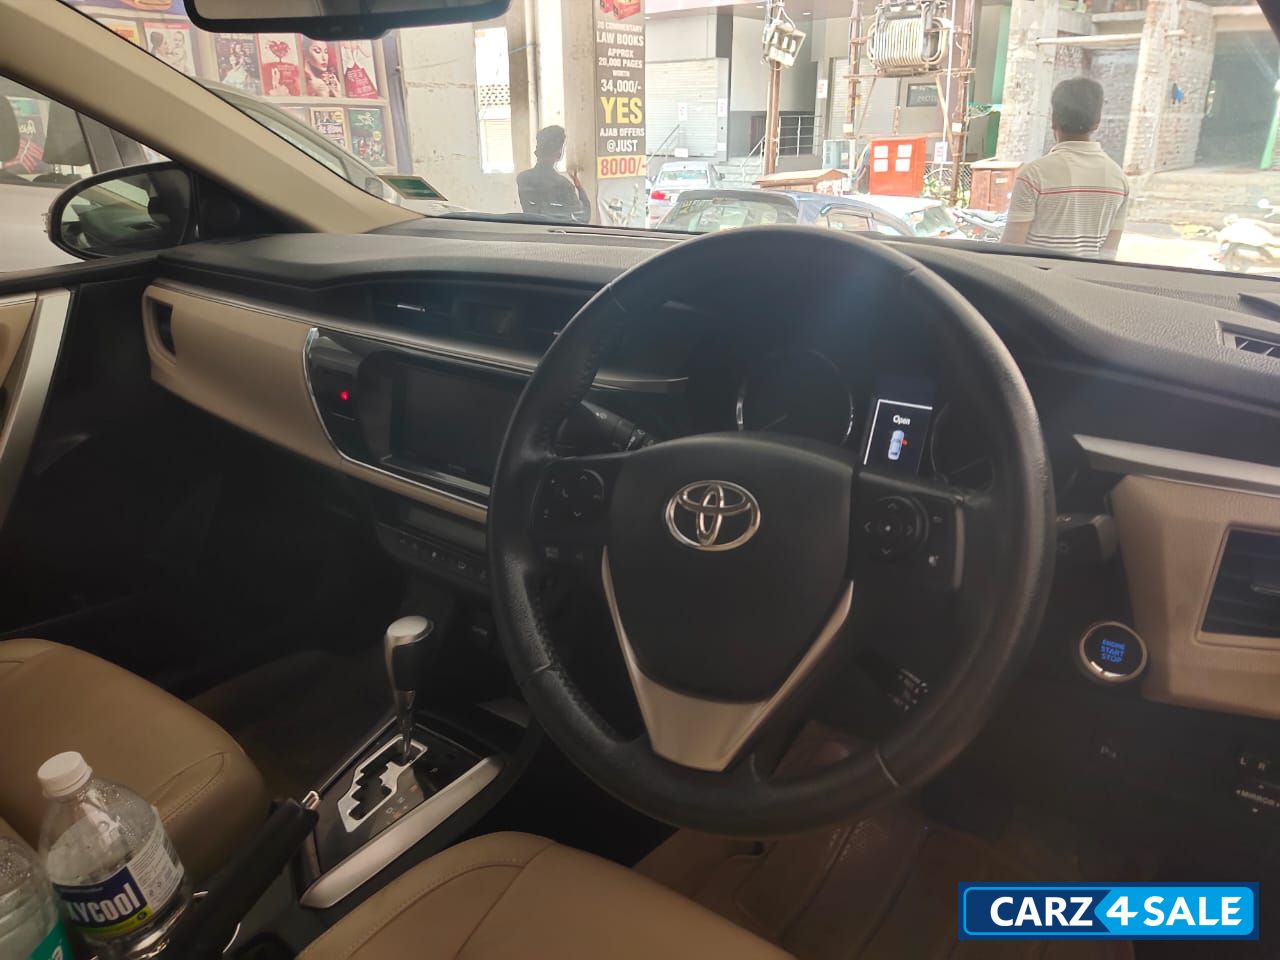 Toyota Corolla Altis 1.8 VL AT